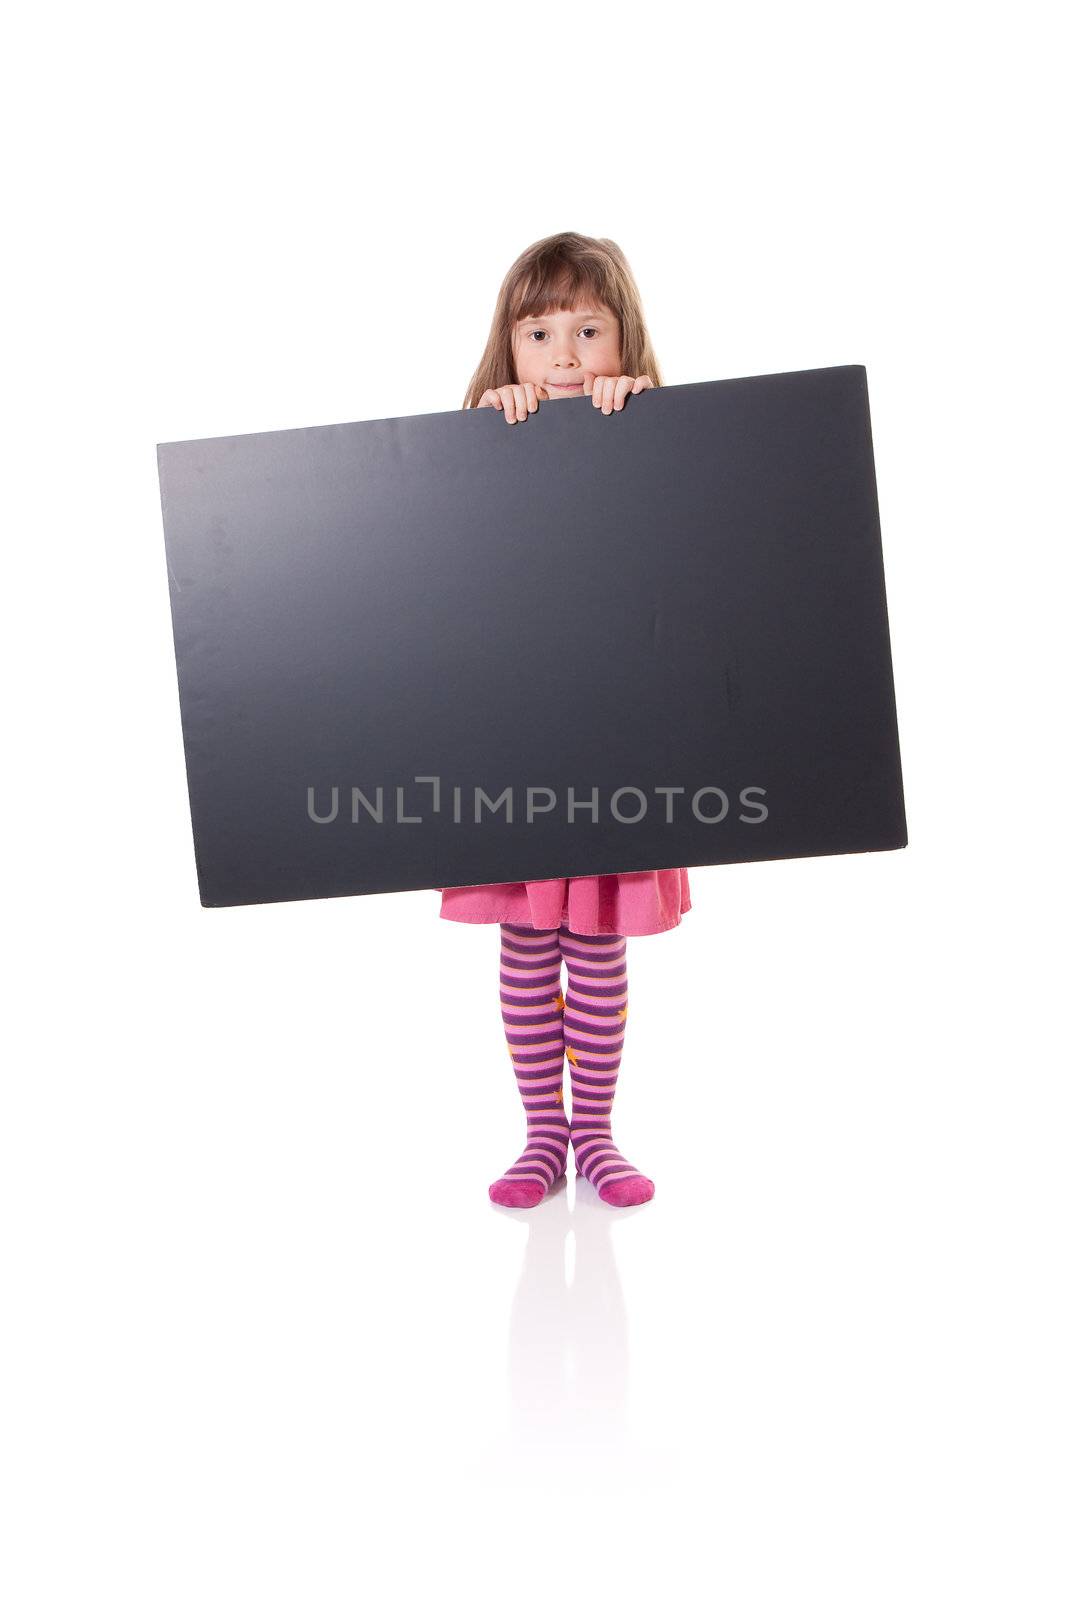 Cute little girl holding a blank cardboard sign